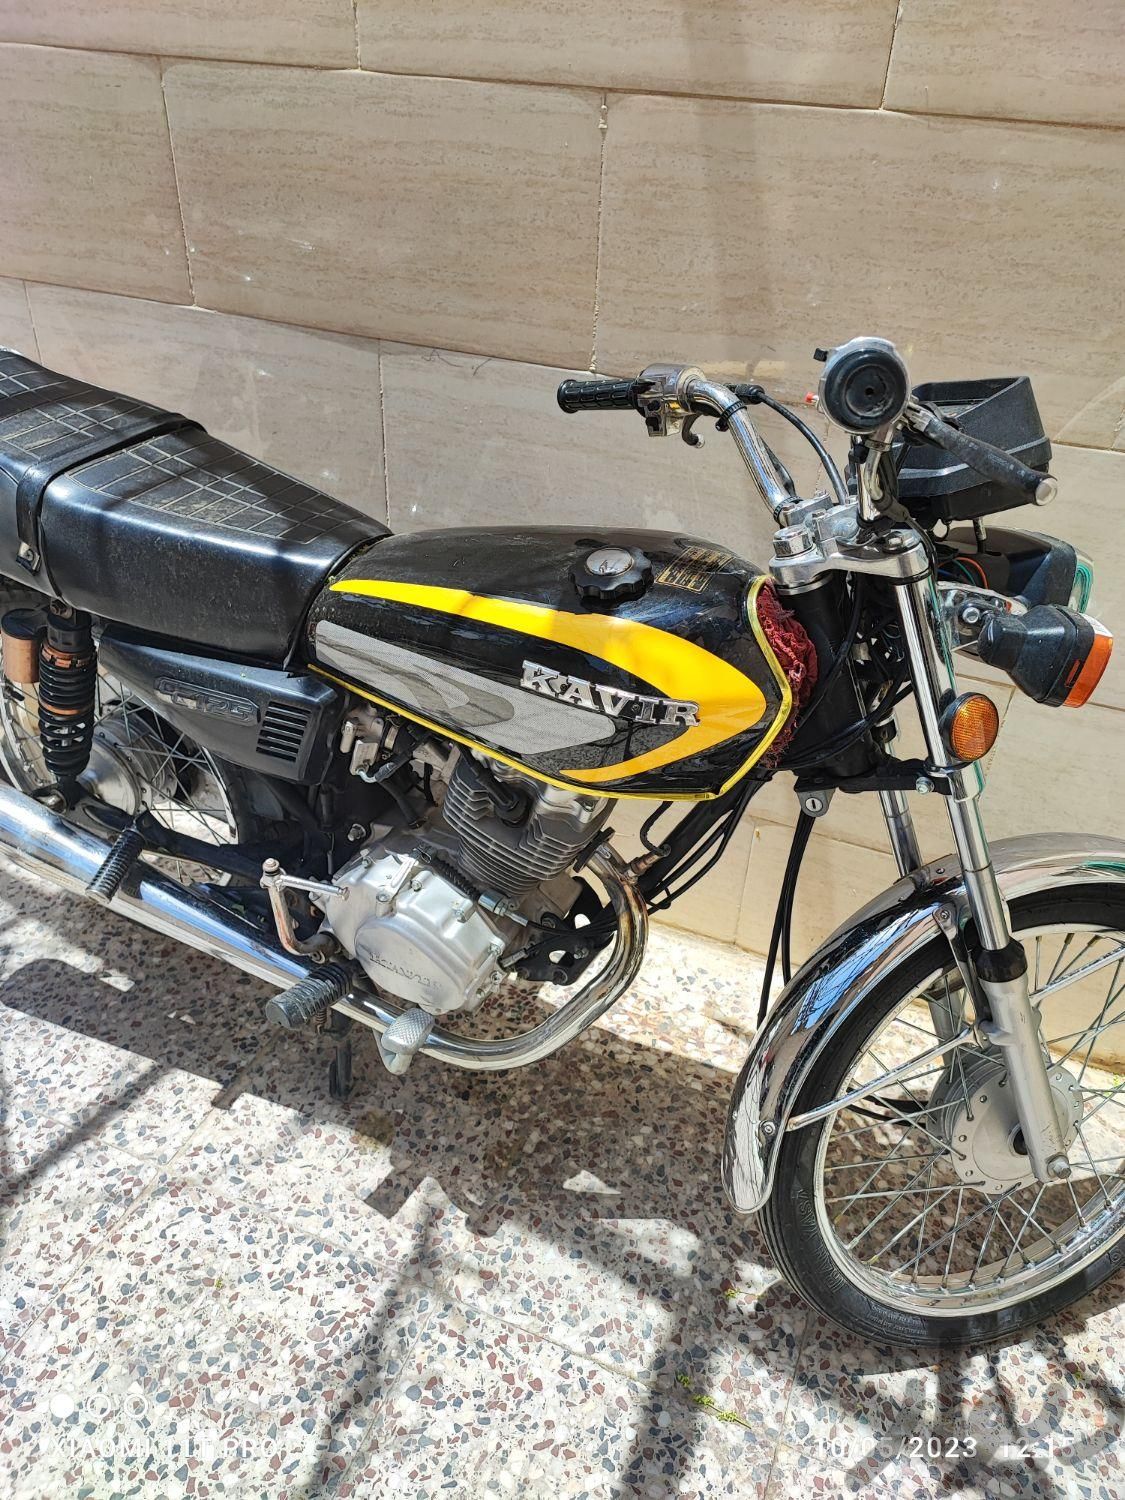 کویر مدل 99|موتورسیکلت|اصفهان, دنارت|دیوار